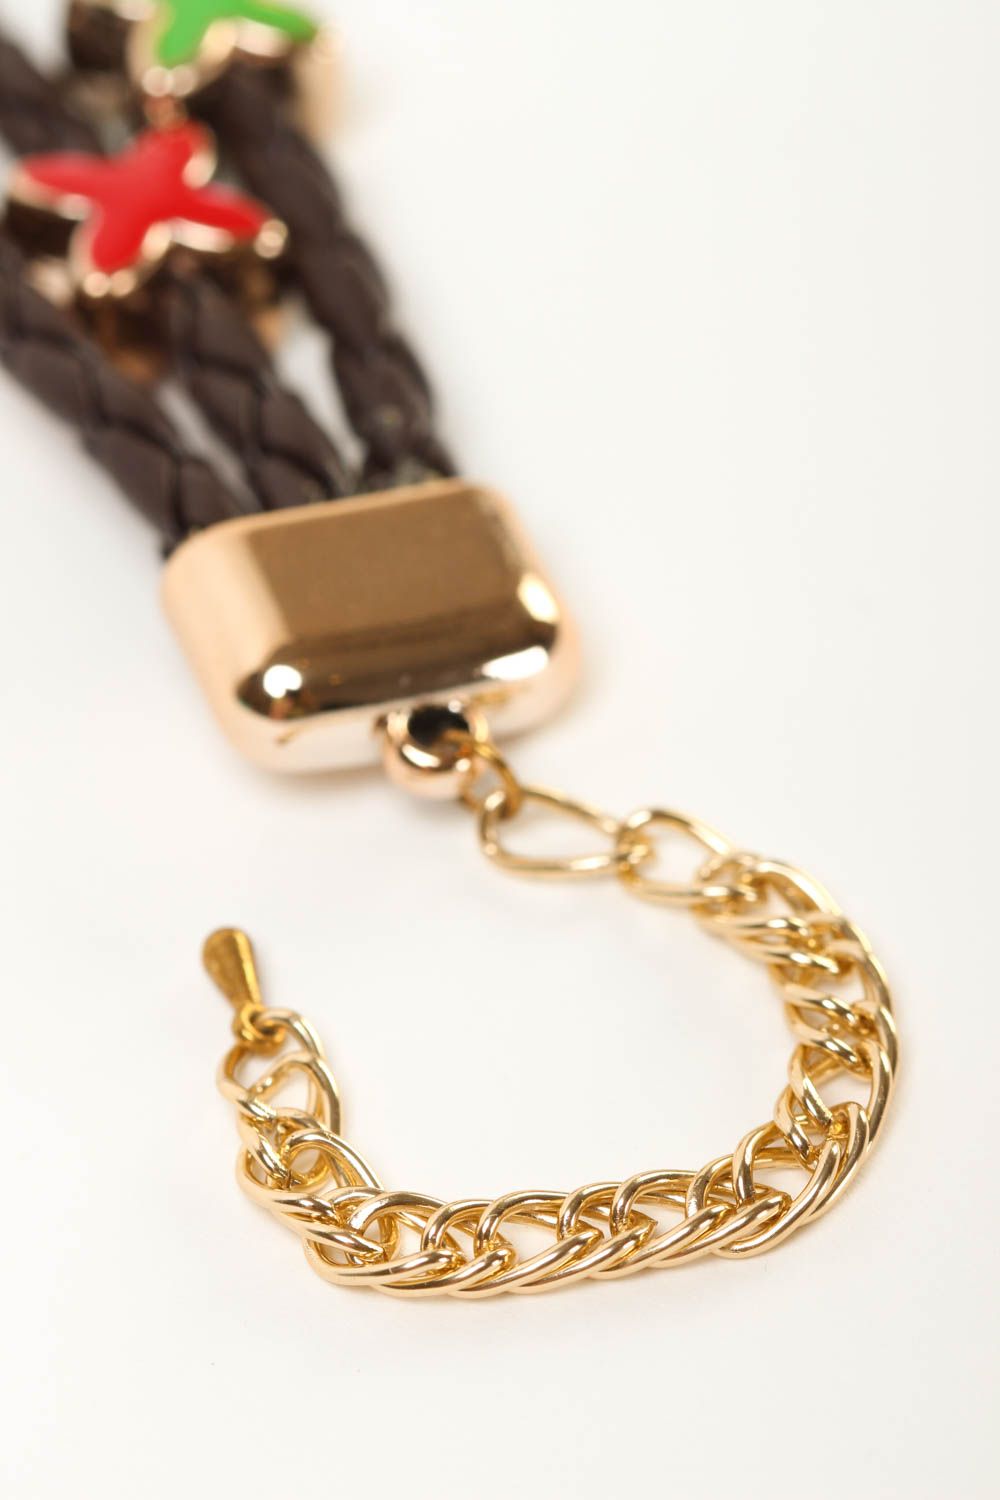 Beautiful handmade leather bracelet wrist bracelet designs handmade jewellery photo 3